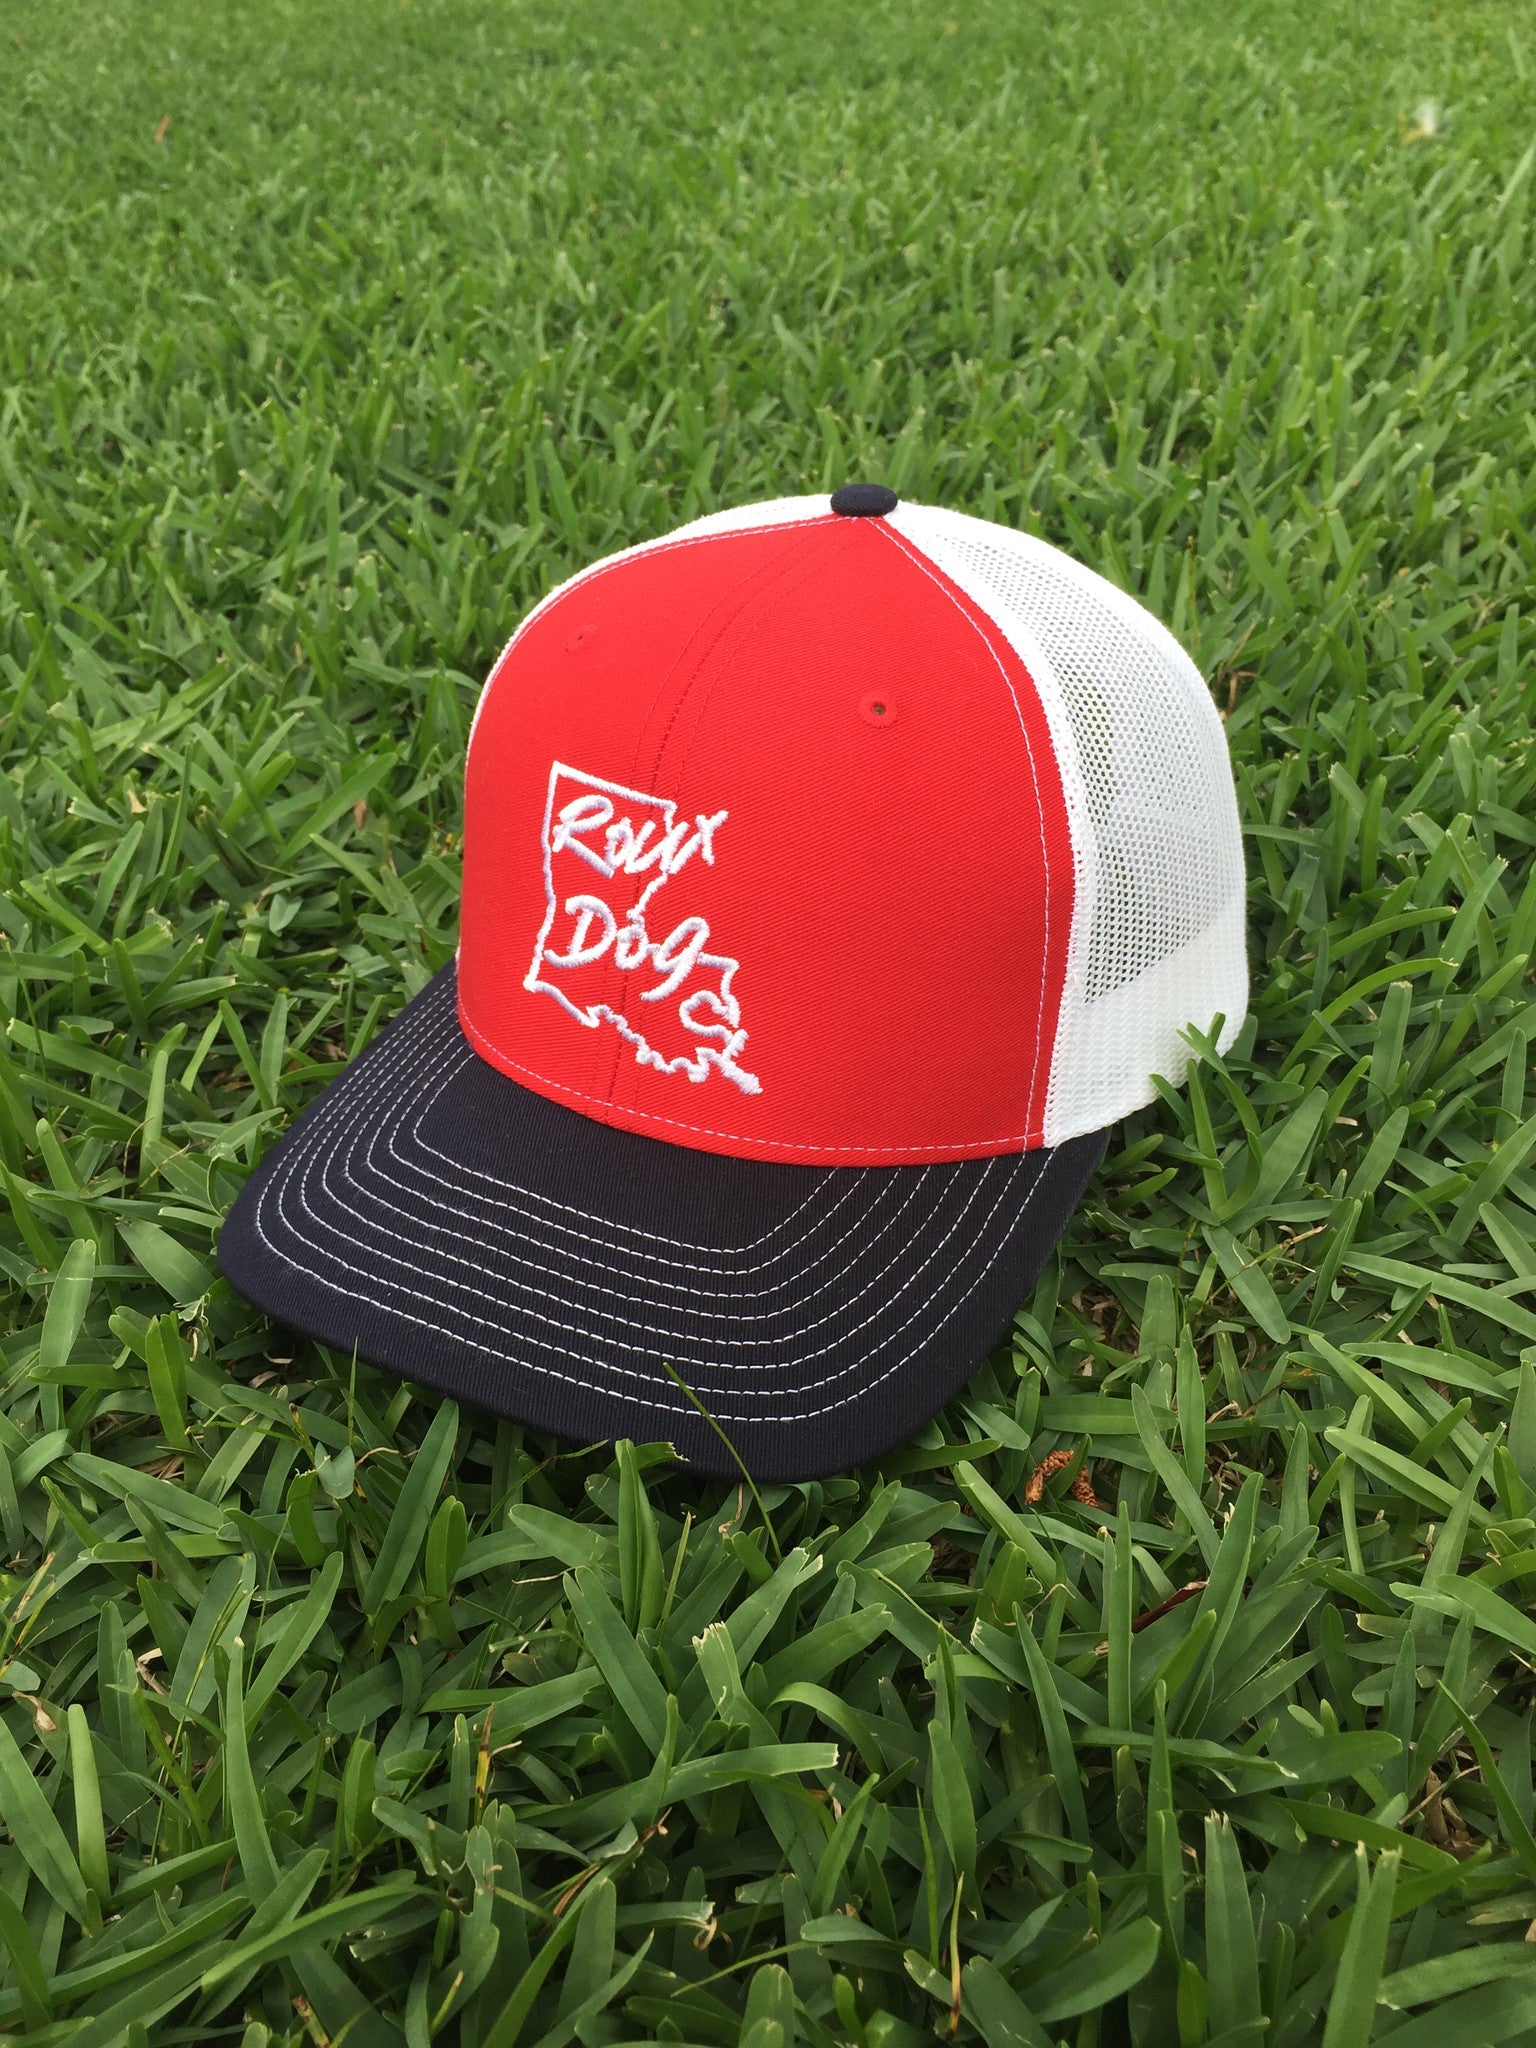 Roux Dog Logo Mesh Back Cap -- Red/White/Navy